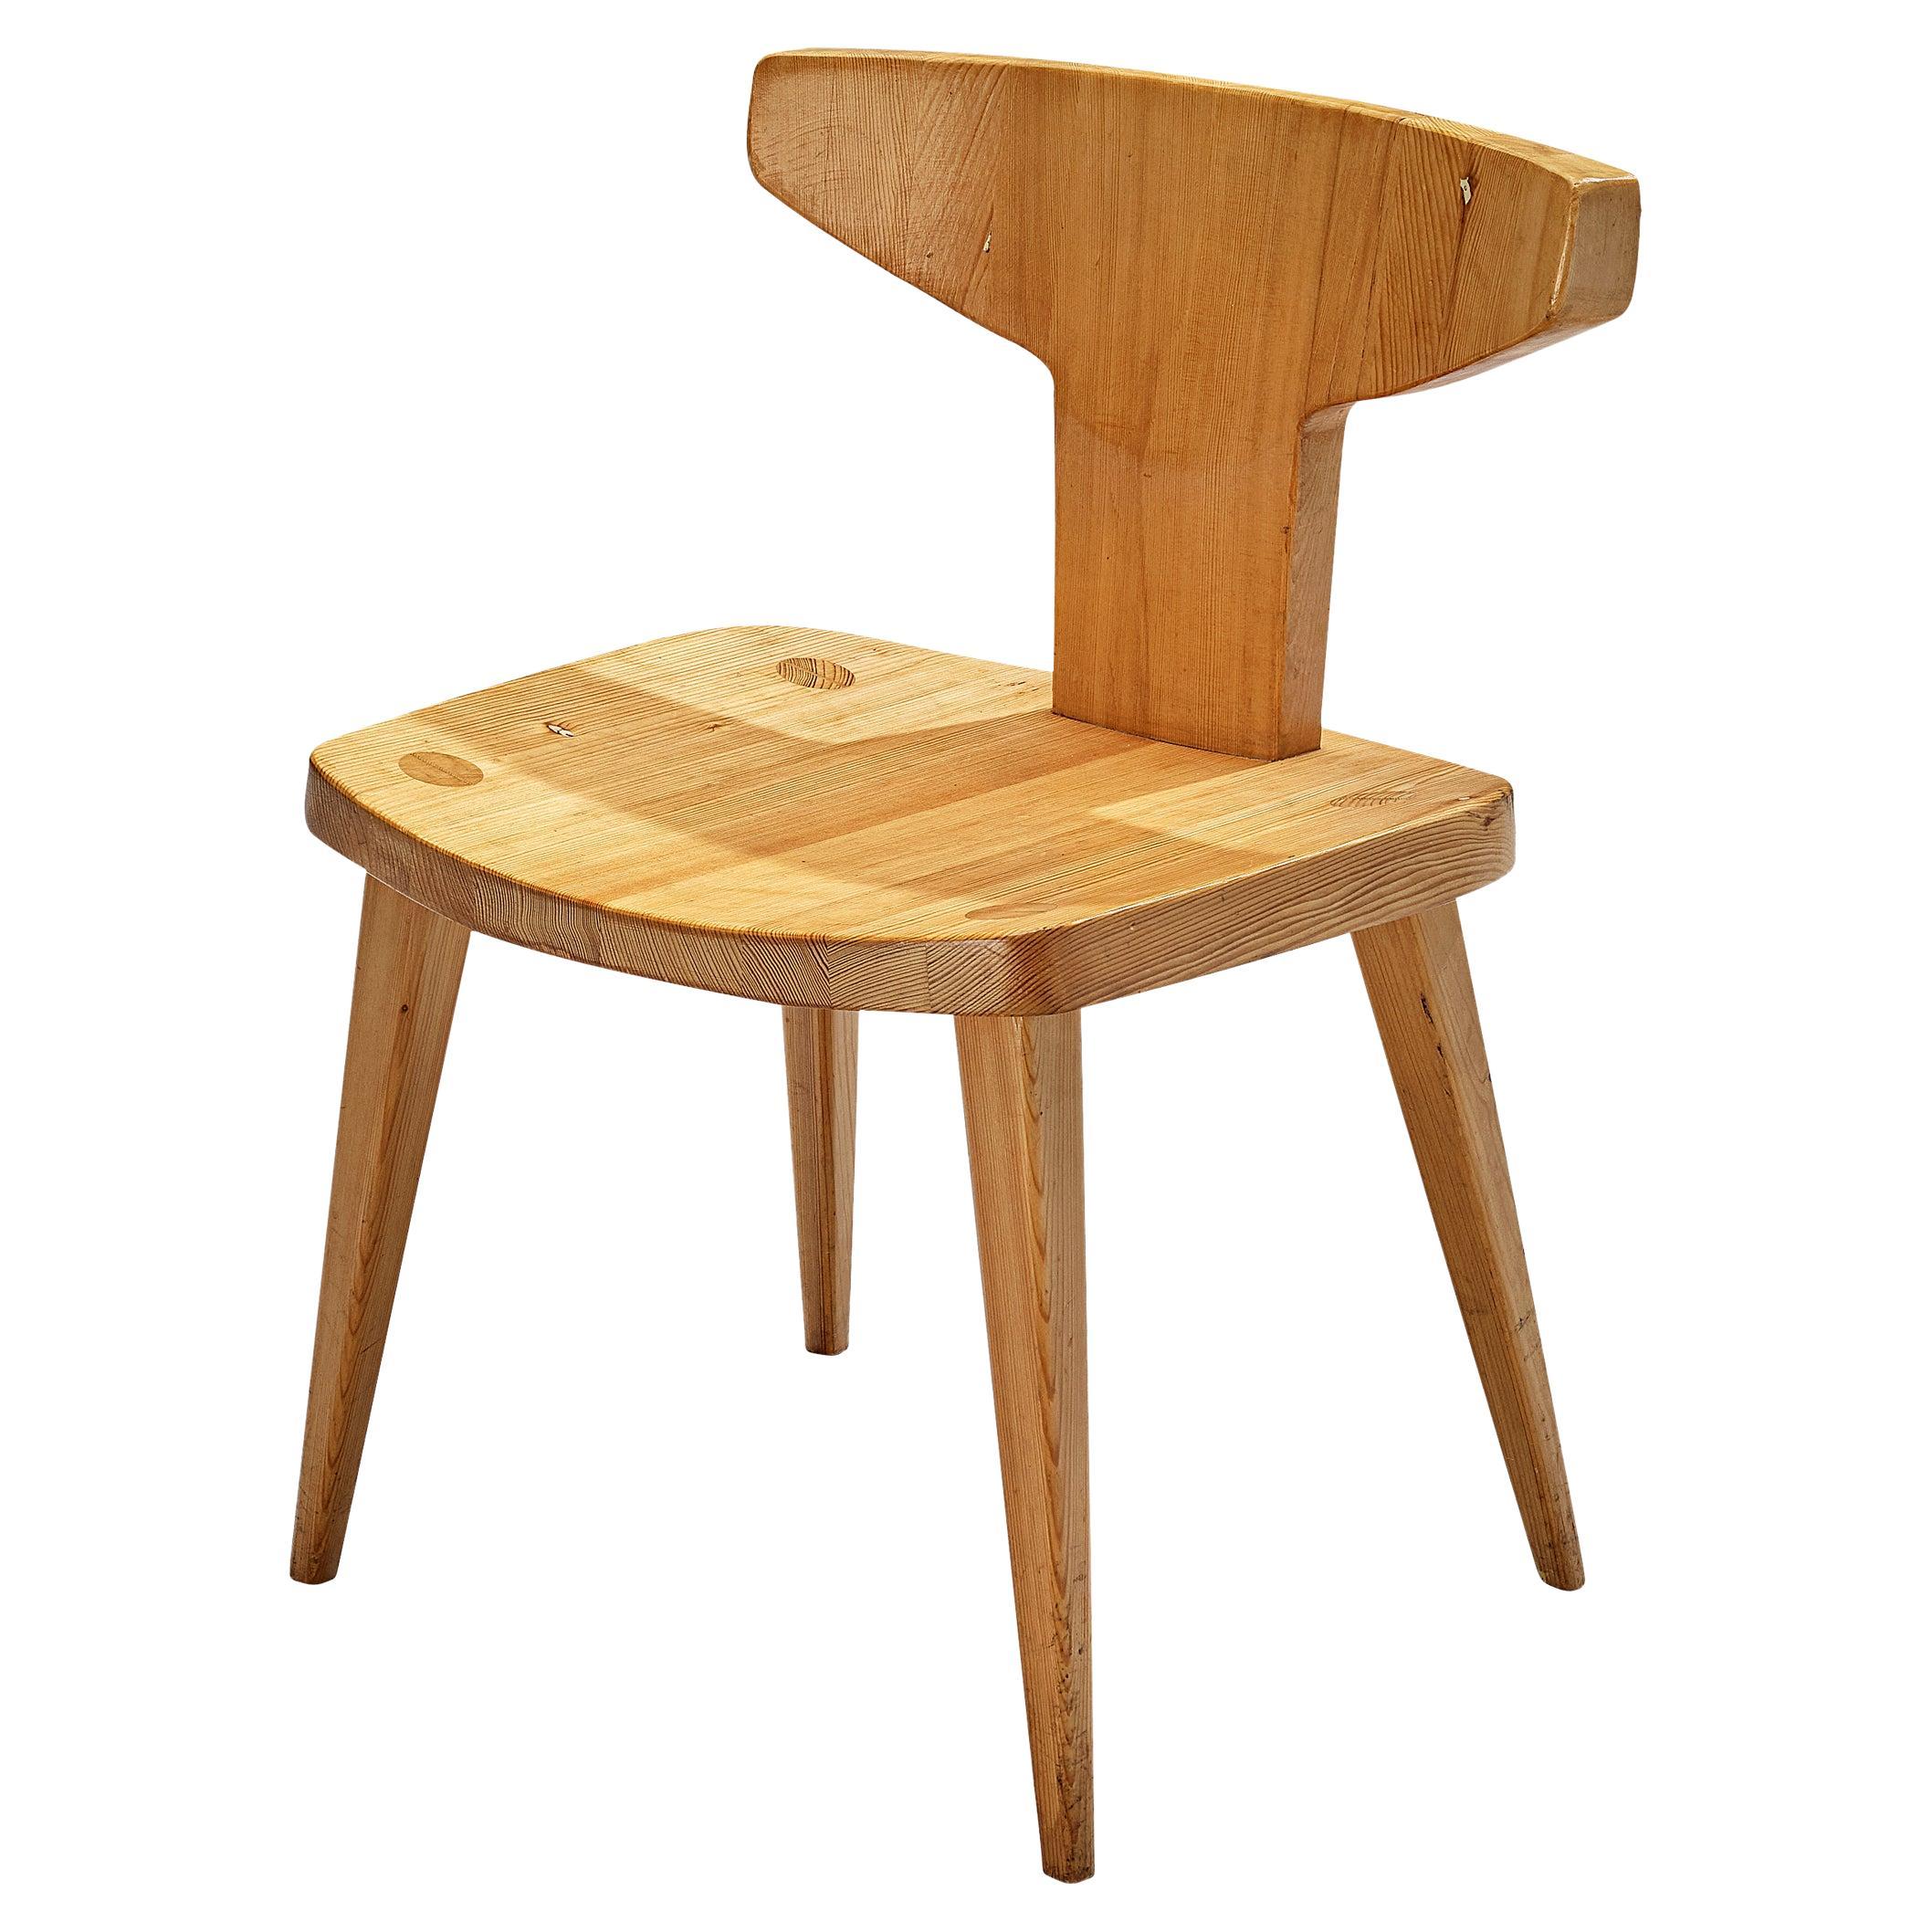 Jacob Kielland-Brandt Sculptural Chair in Solid Pine